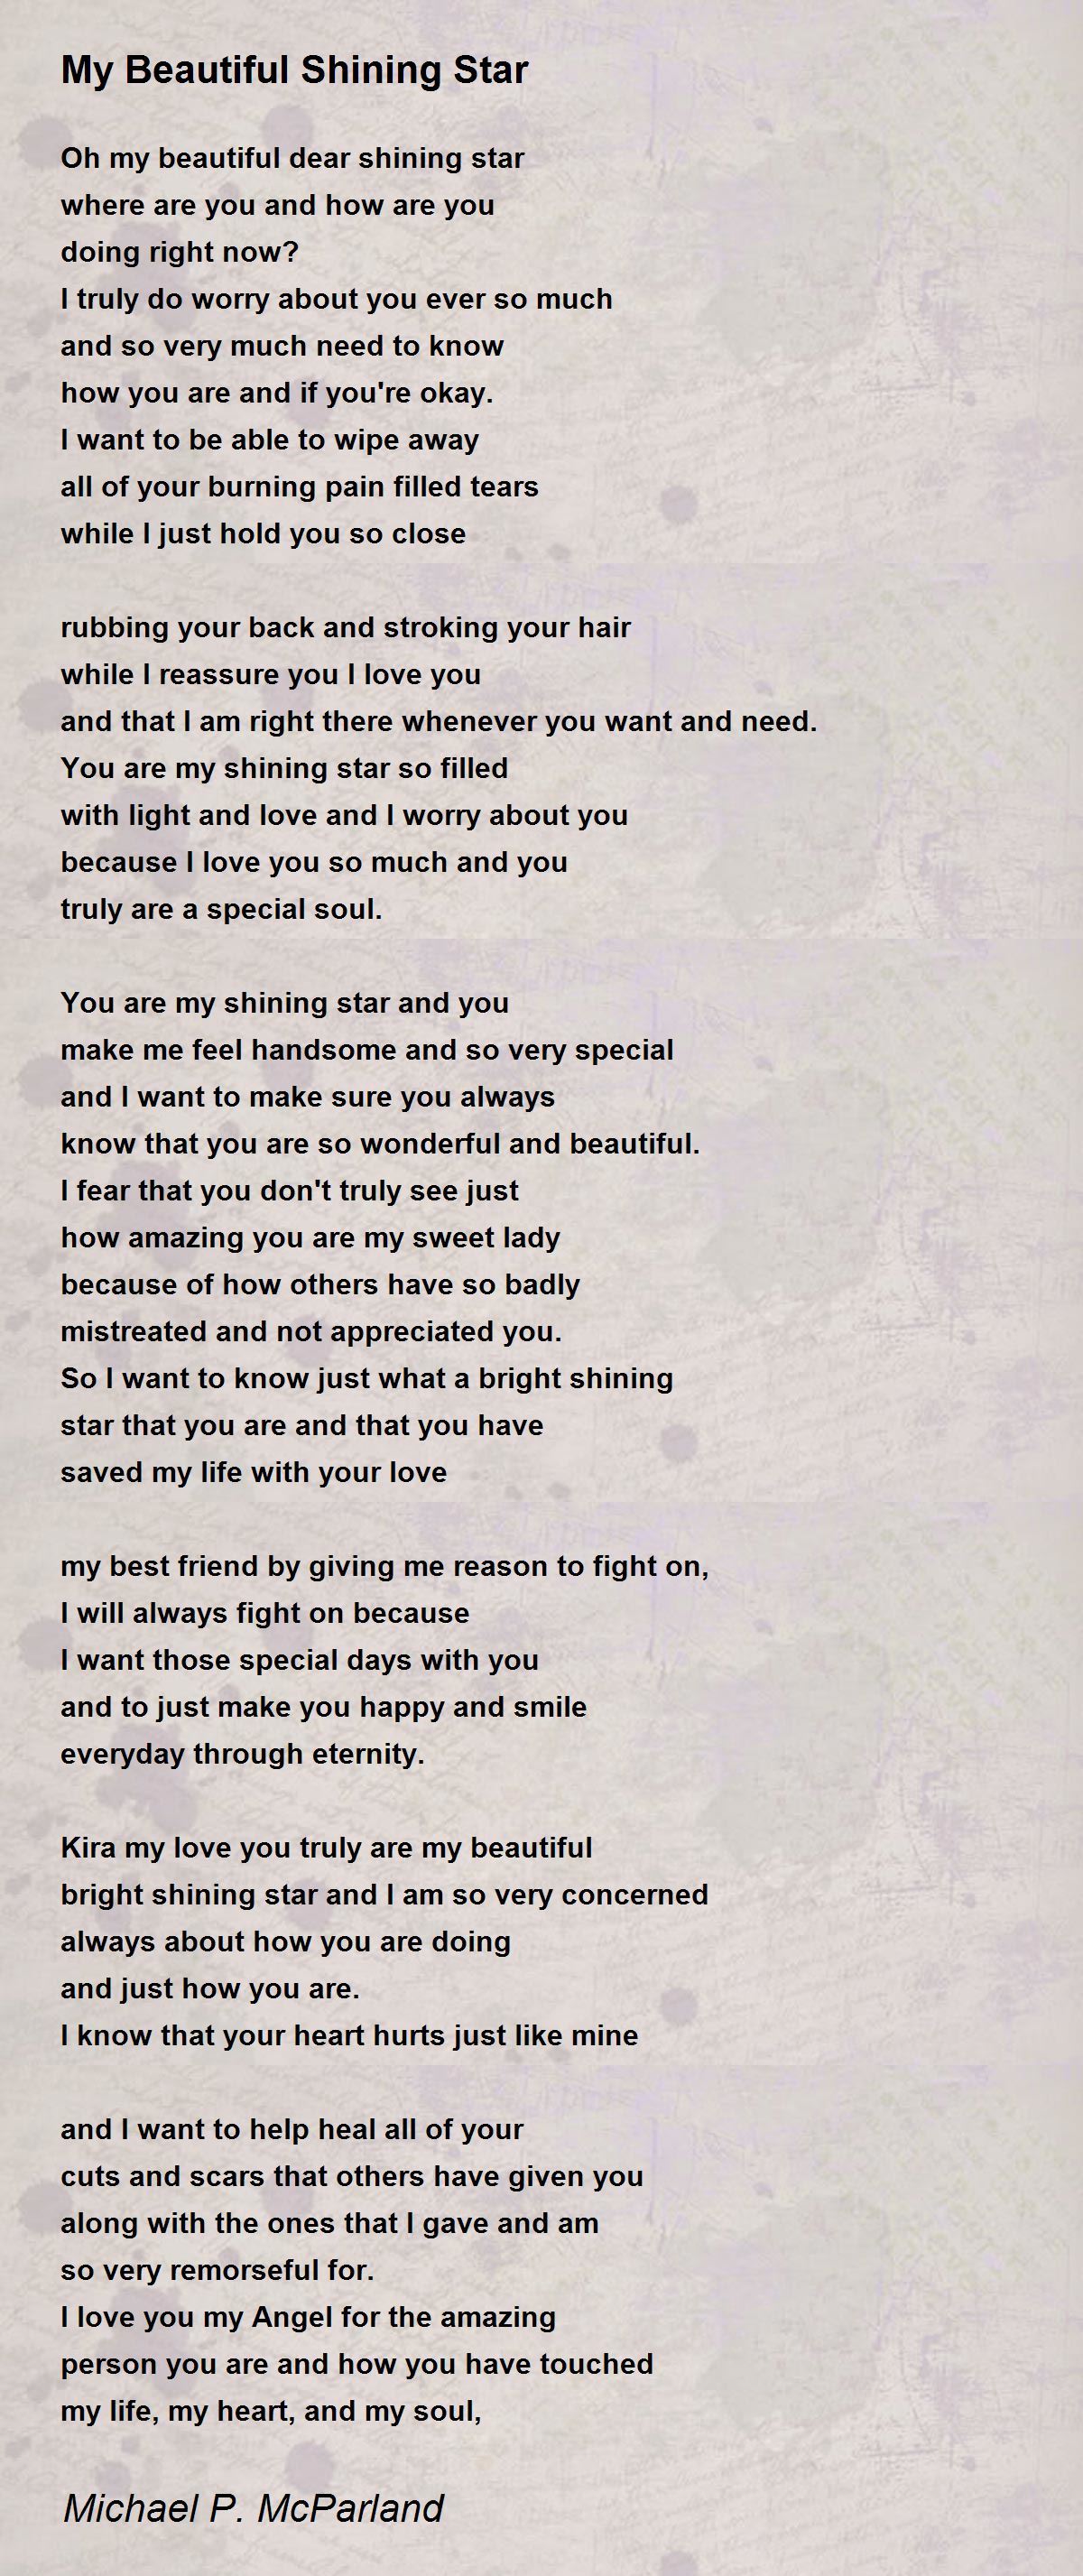 My shining star poem